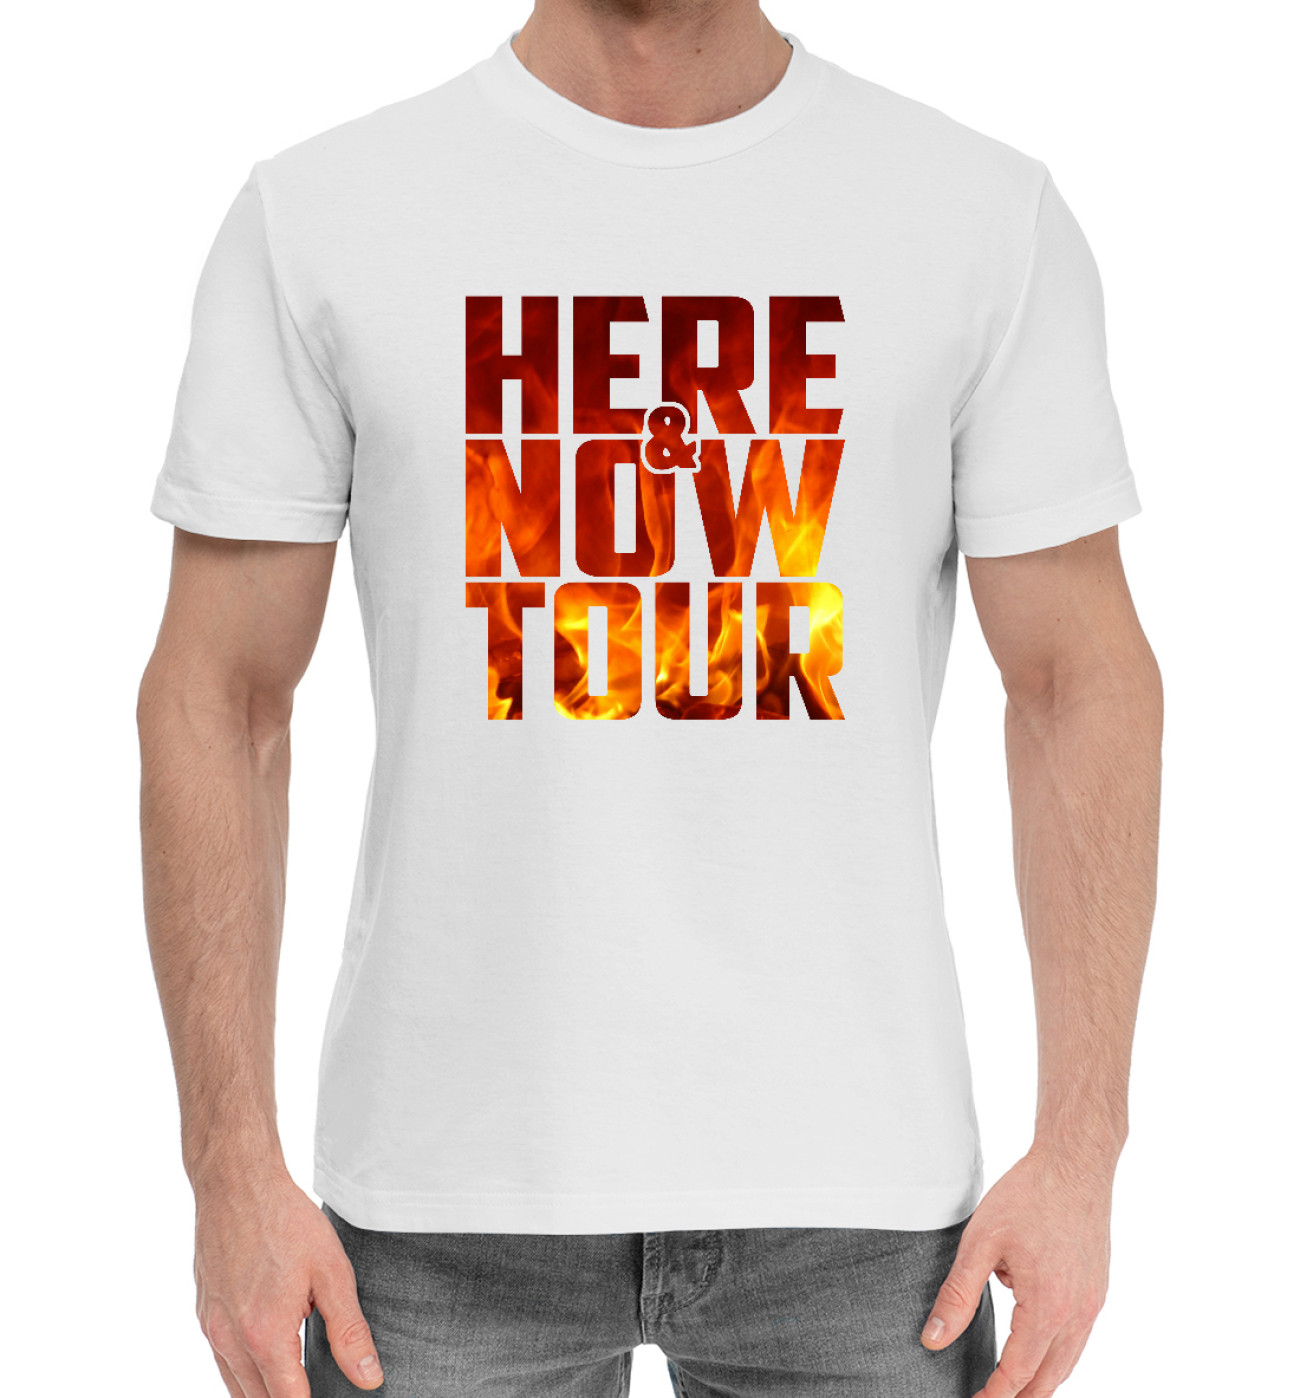 Мужская Хлопковая футболка Nickelback, артикул: NIC-508491-hfu-2